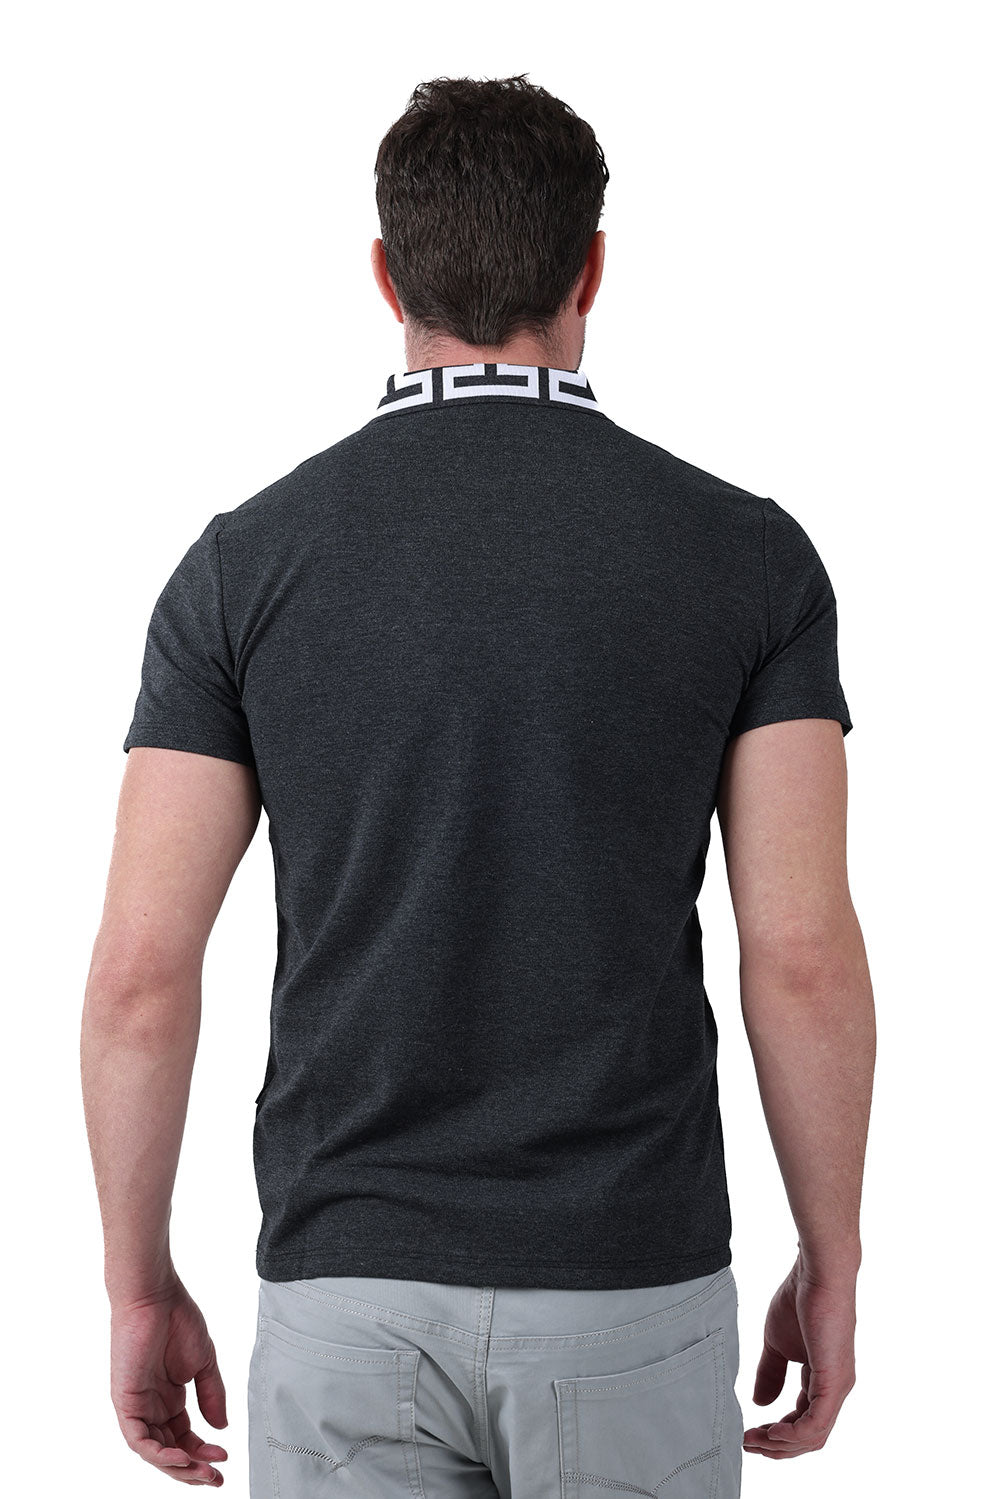 Barabas Men's Greek Key Printed Pattern Short Sleeve Shirts PS121 Charcoal